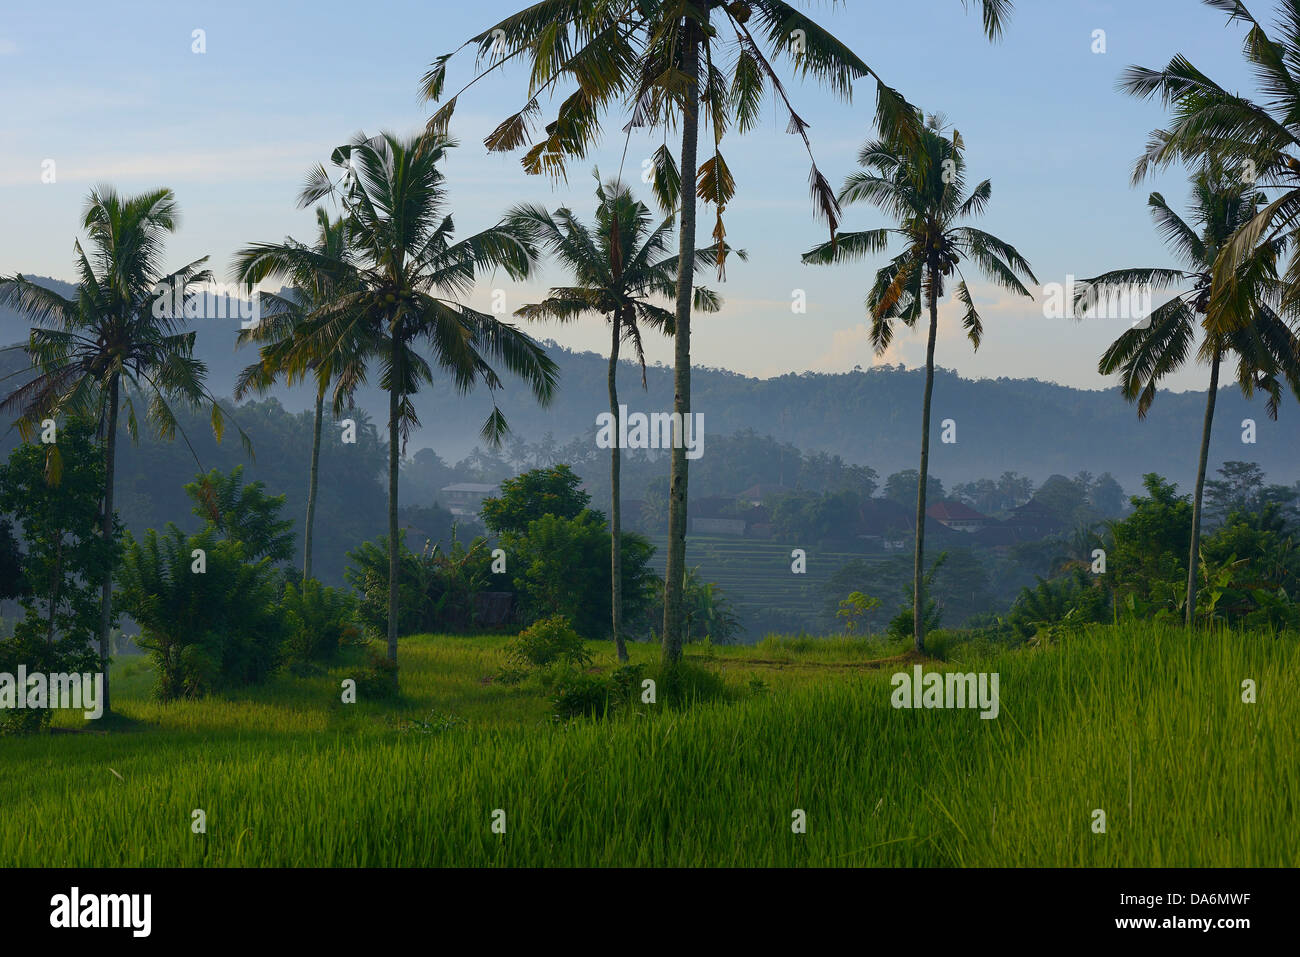 Indonesia, Bali, Sidemen, risaie a terrazza e noci di cocco al mattino Foto Stock